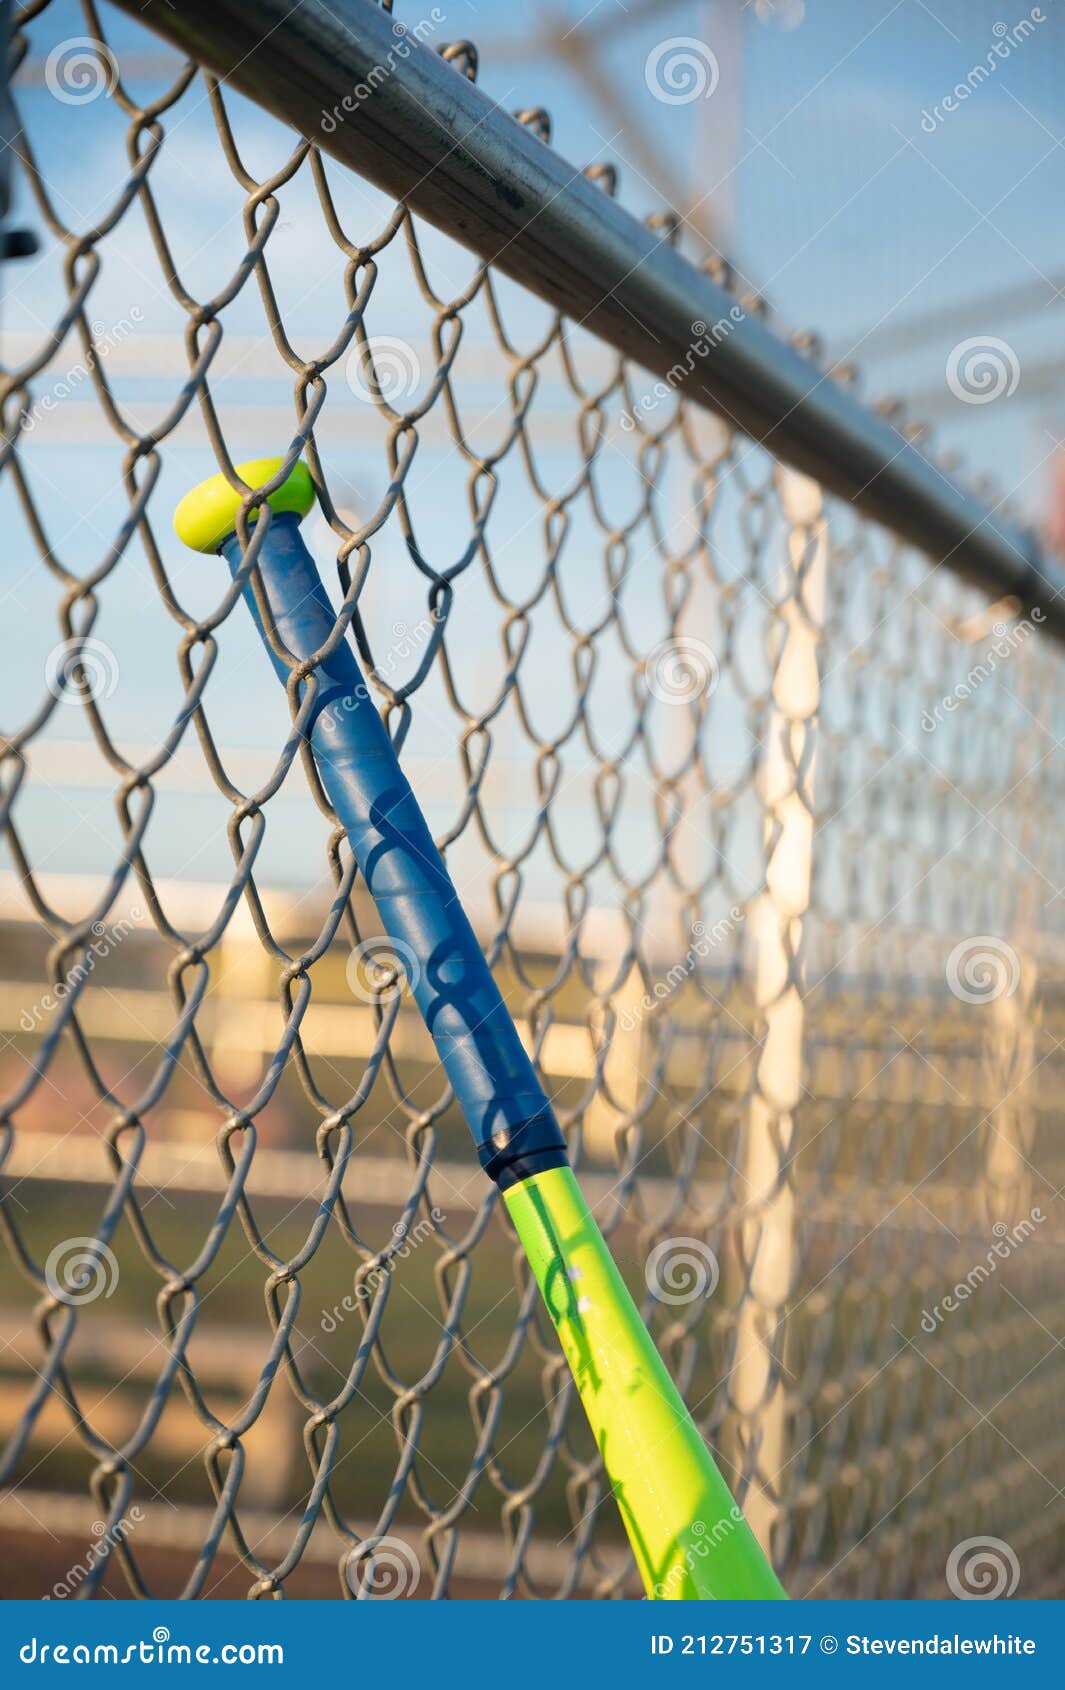 t-ball baseball bat hanging on dugout fence